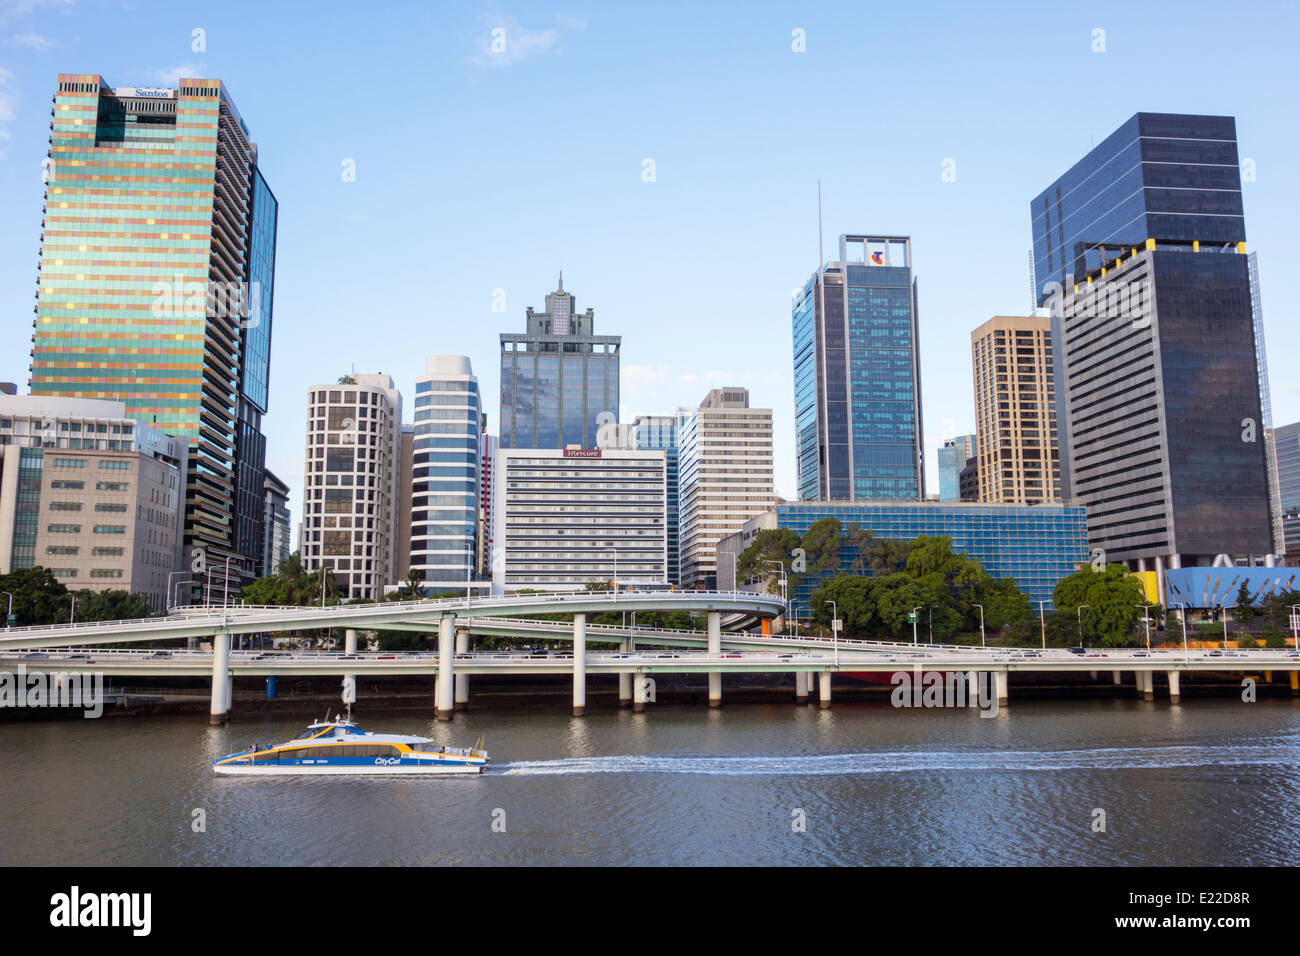 Brisbane Australia CBD,Victoria Bridge,Southbank,city skyline,skyscrapers,buildings,CityCat,CityFerries,ferry,boat,Pacific Motorway,M3,Brisbane River, Stock Photo